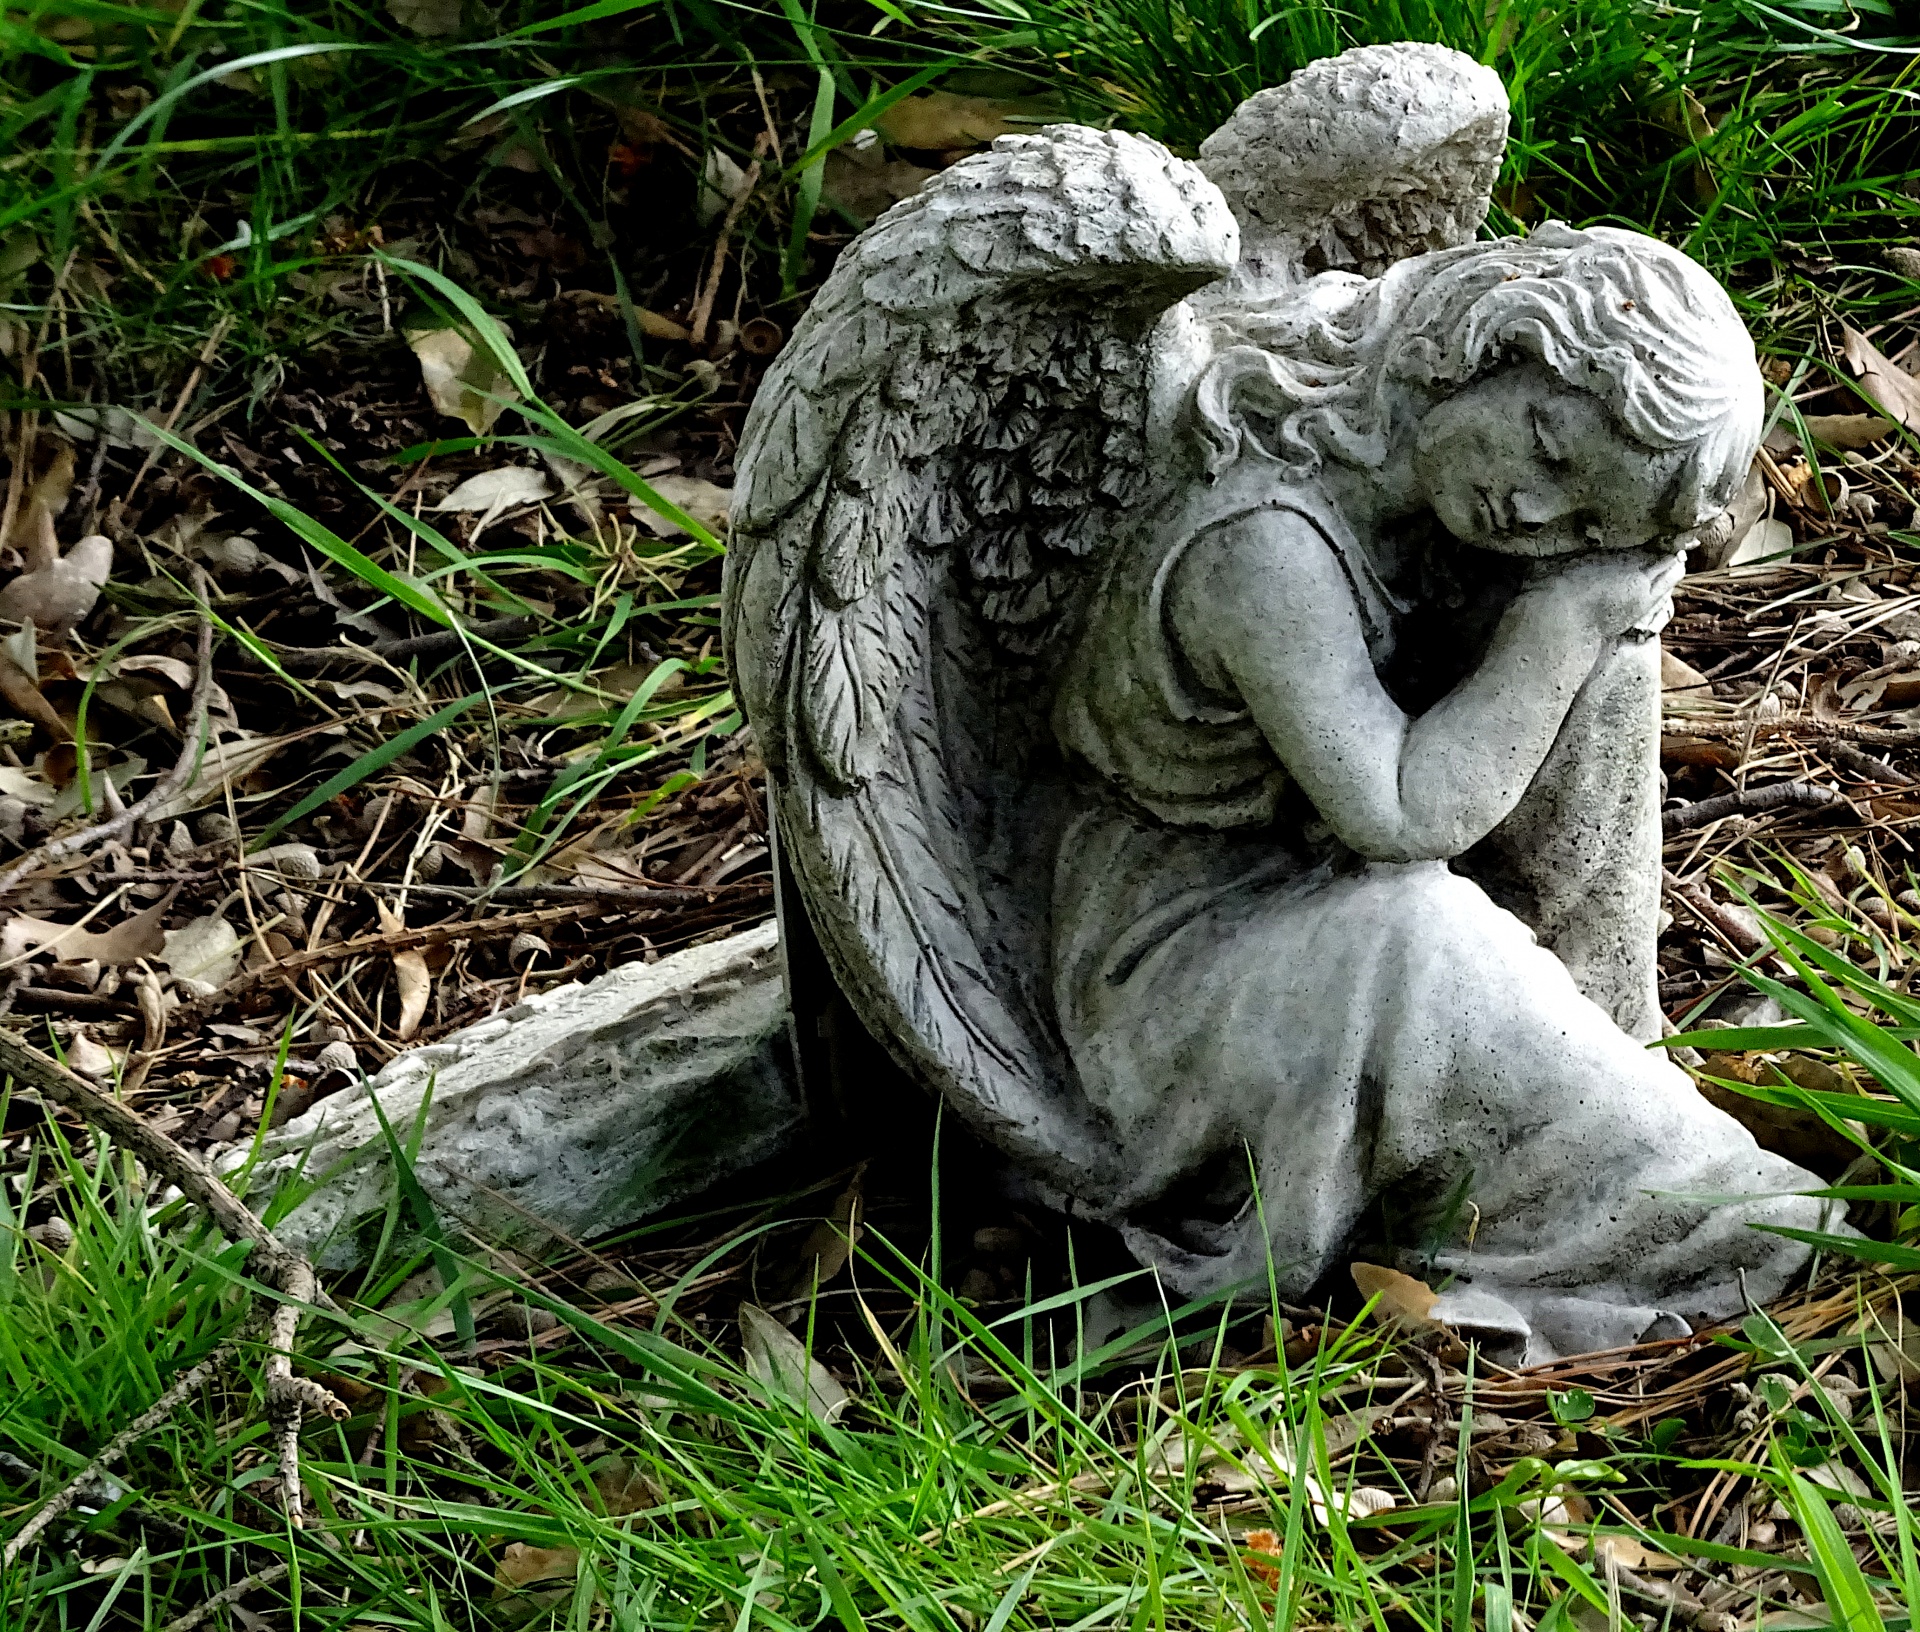 Cemetery Gravestone Angel